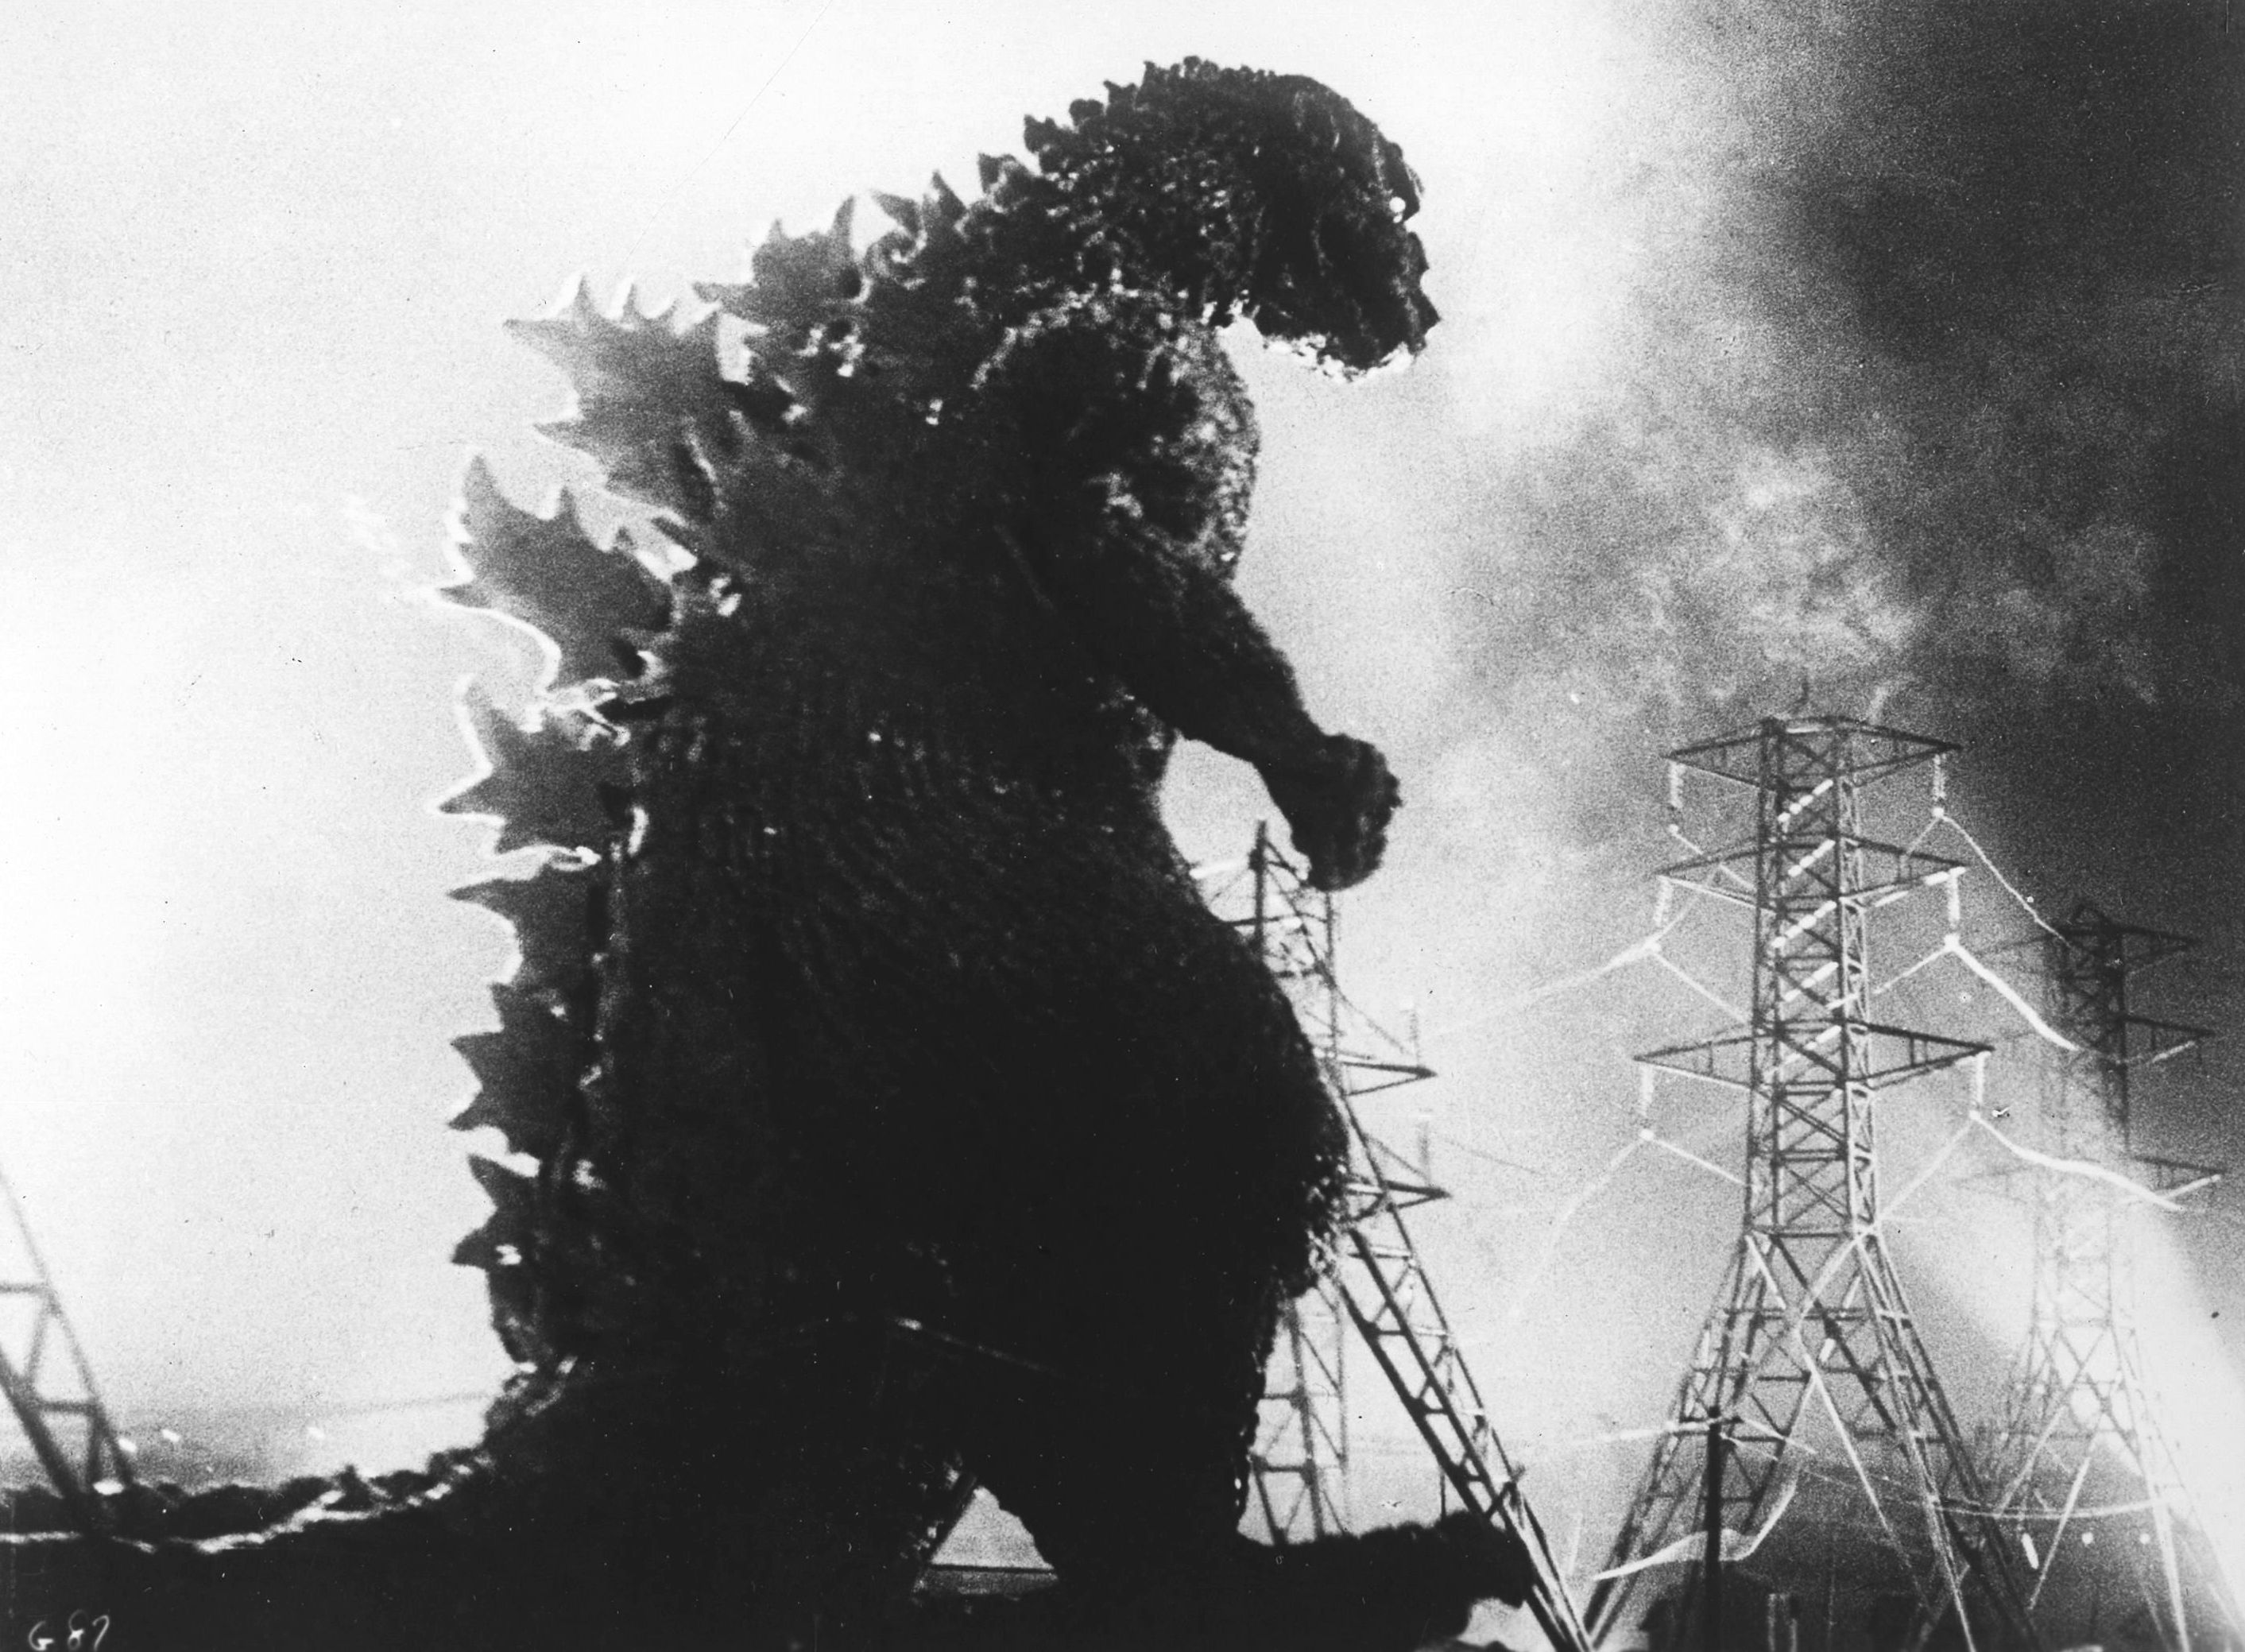 Godzilla (1954) Backgrounds, Compatible - PC, Mobile, Gadgets| 2825x2079 px